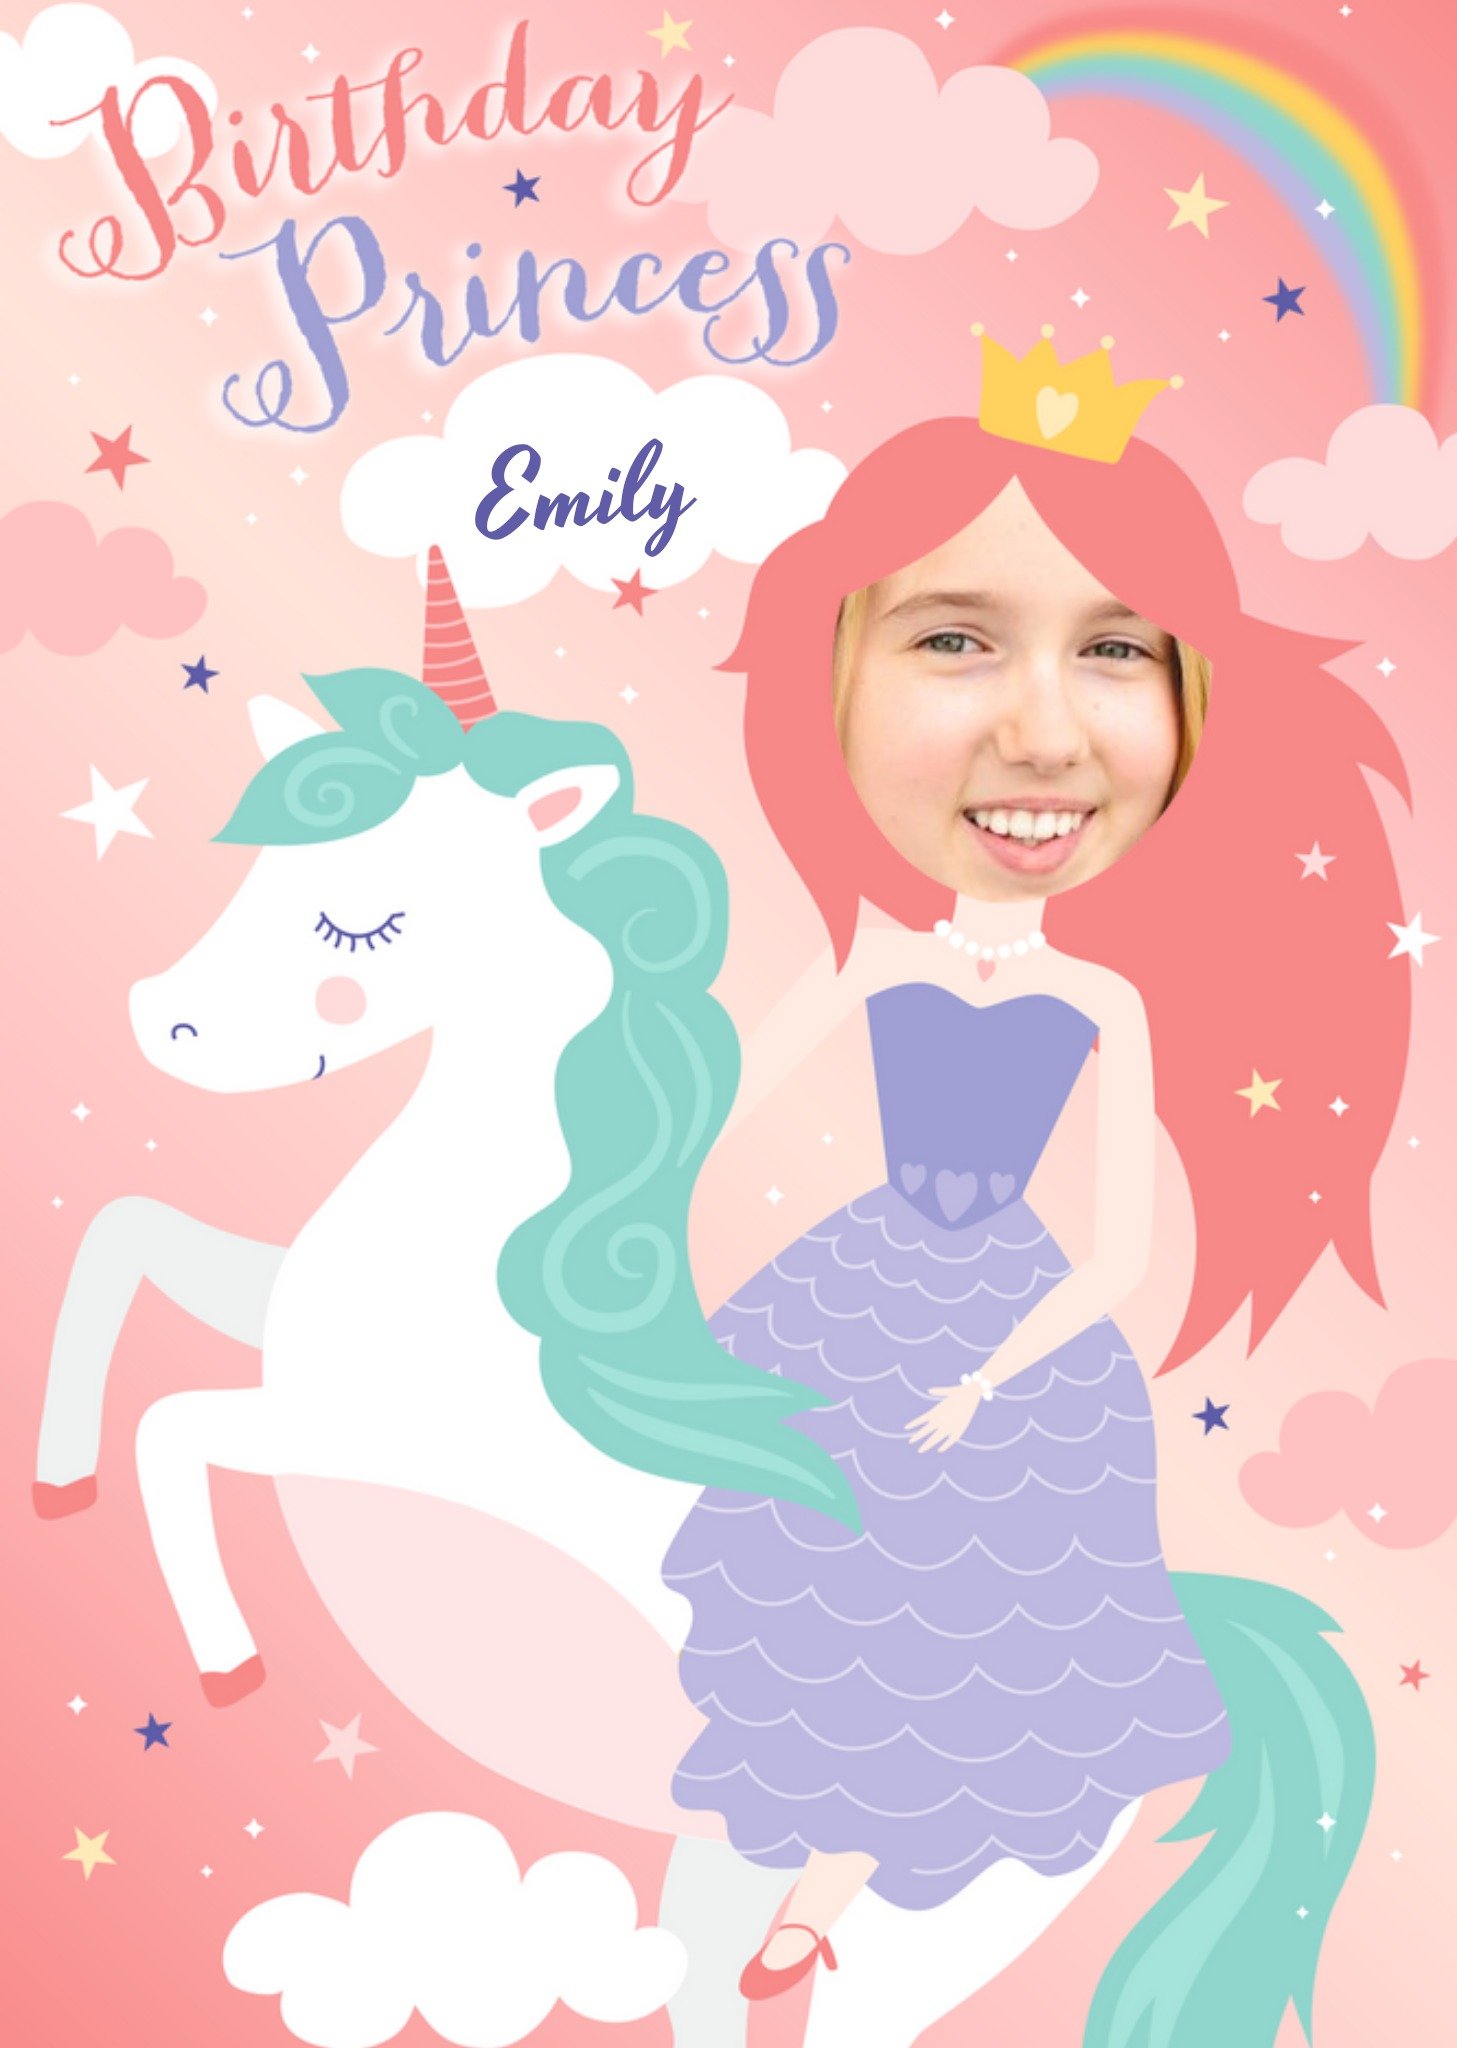 Moonpig Princess & Unicorn Birthday Card - Use Your Own Photos To Make The Recipient A Princess Ecar